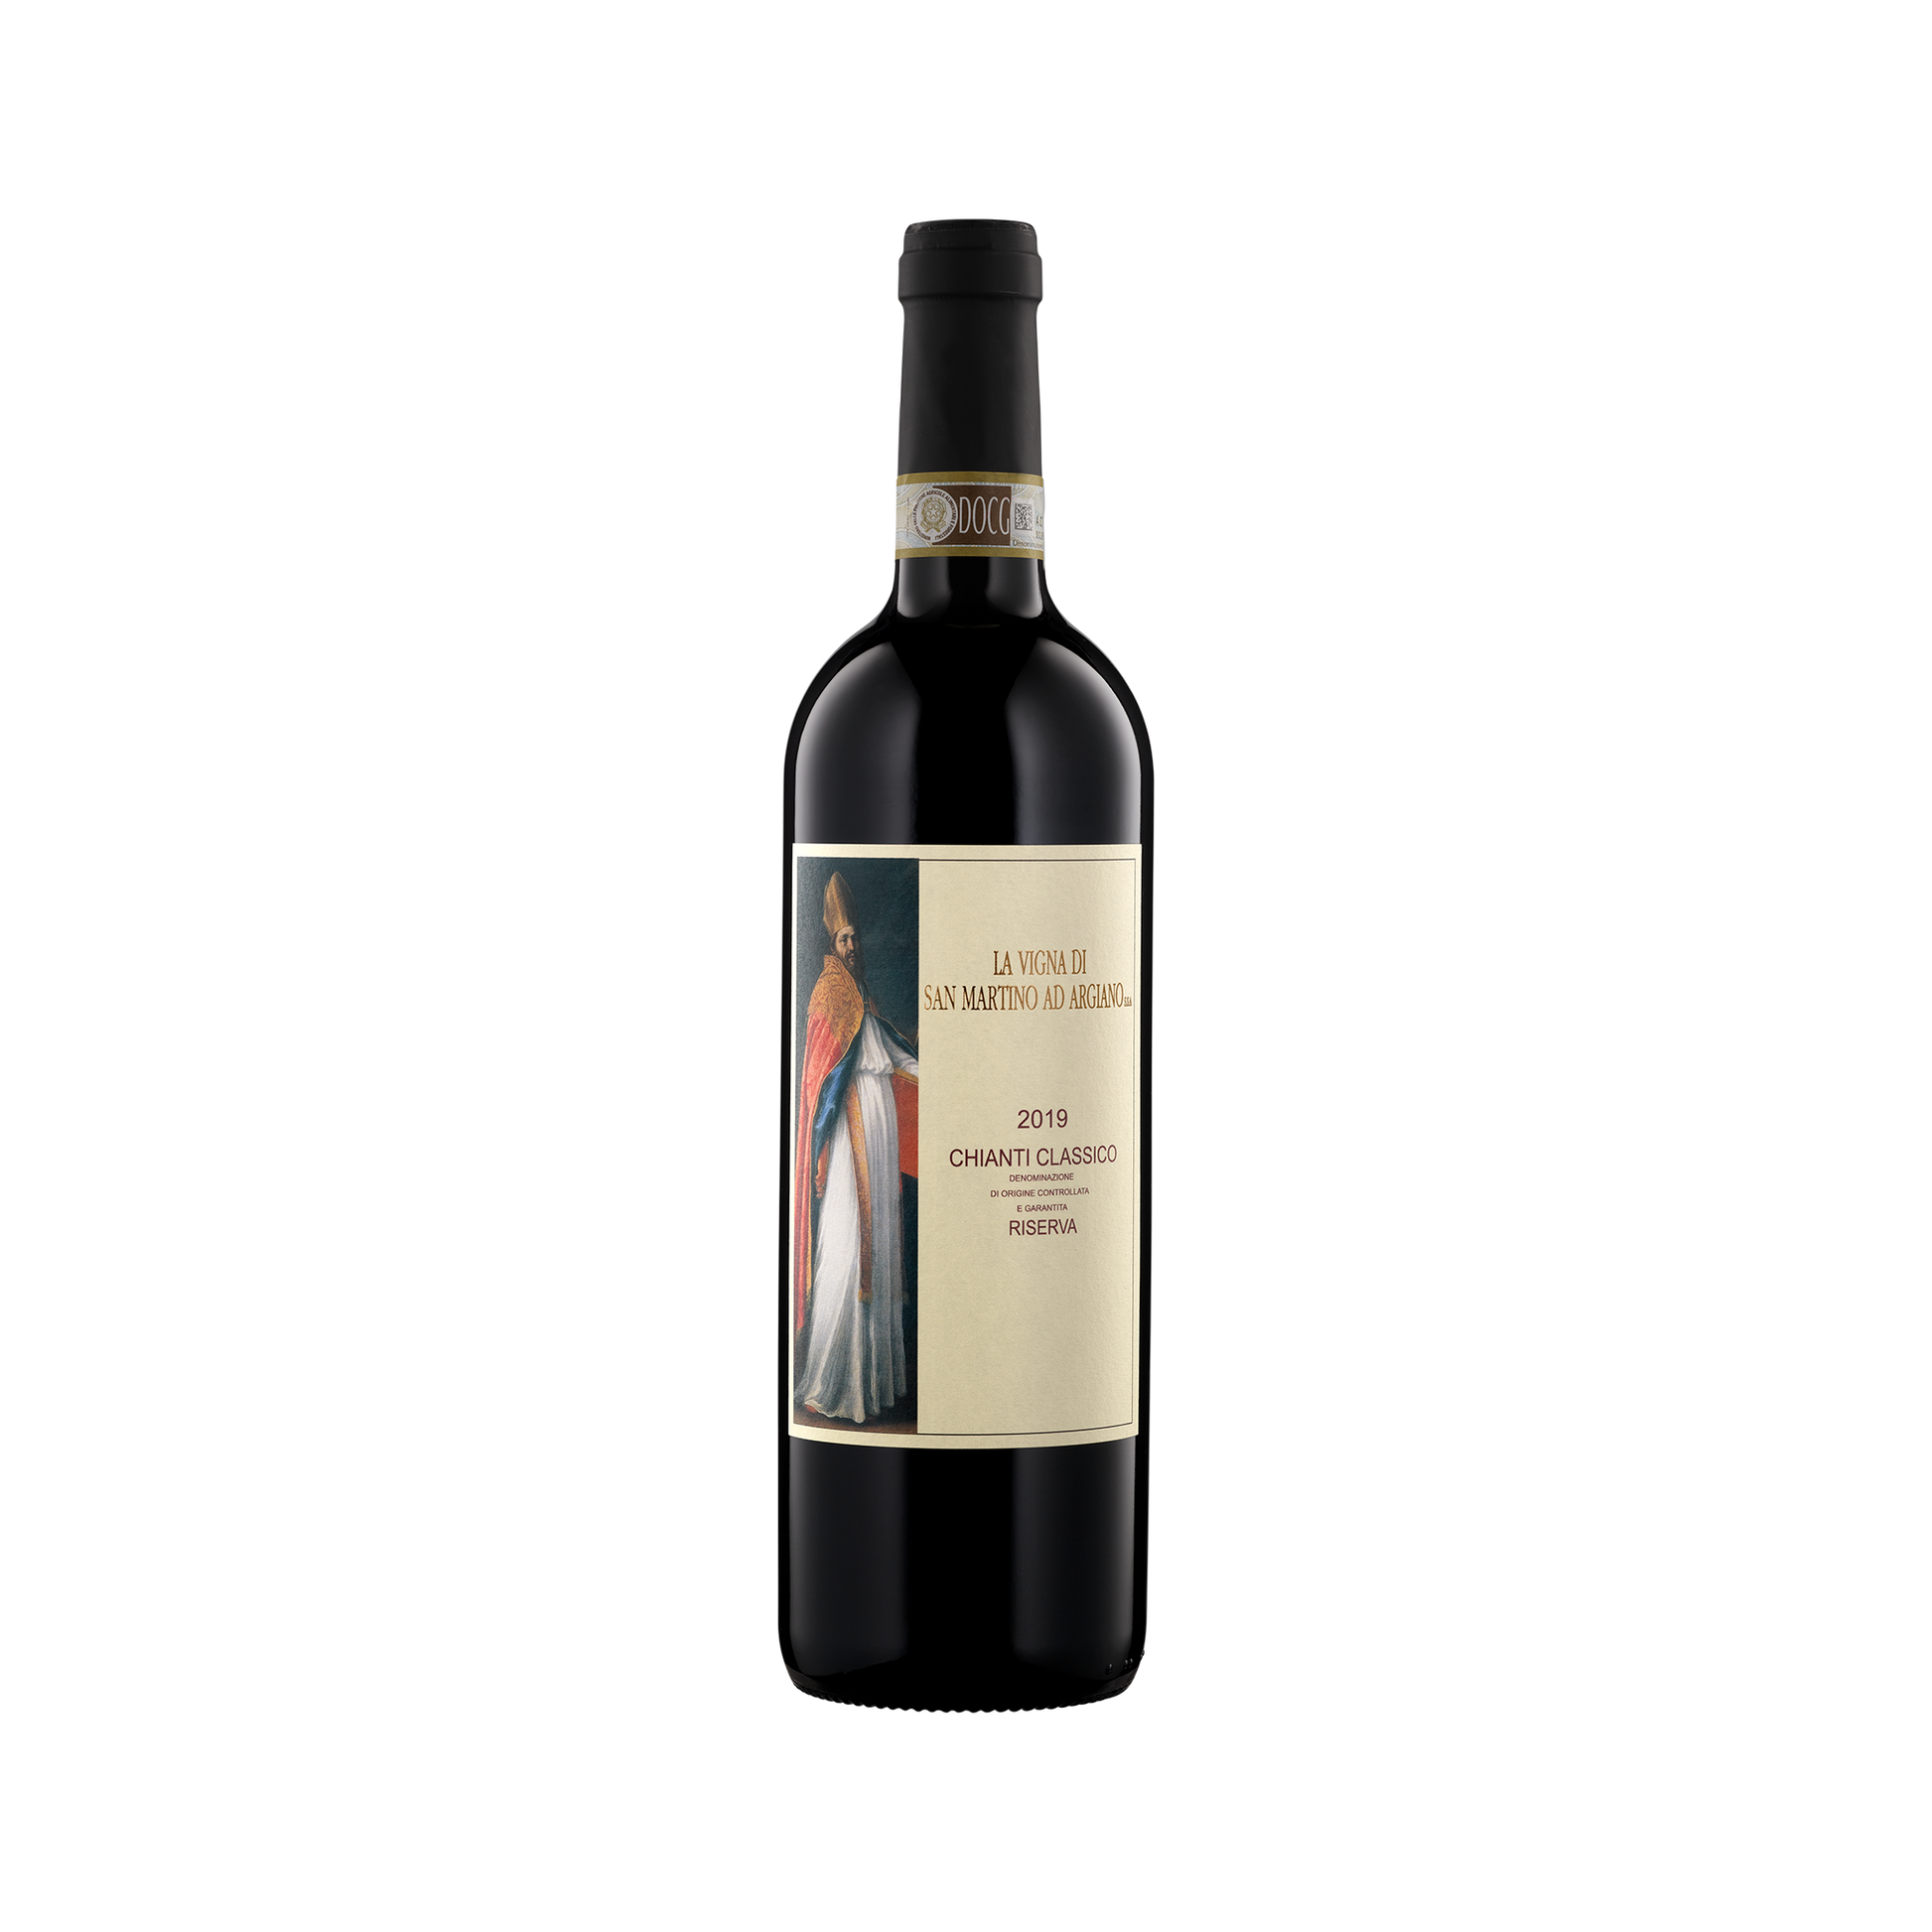 A bottle of La Vigna 2019 Chianti